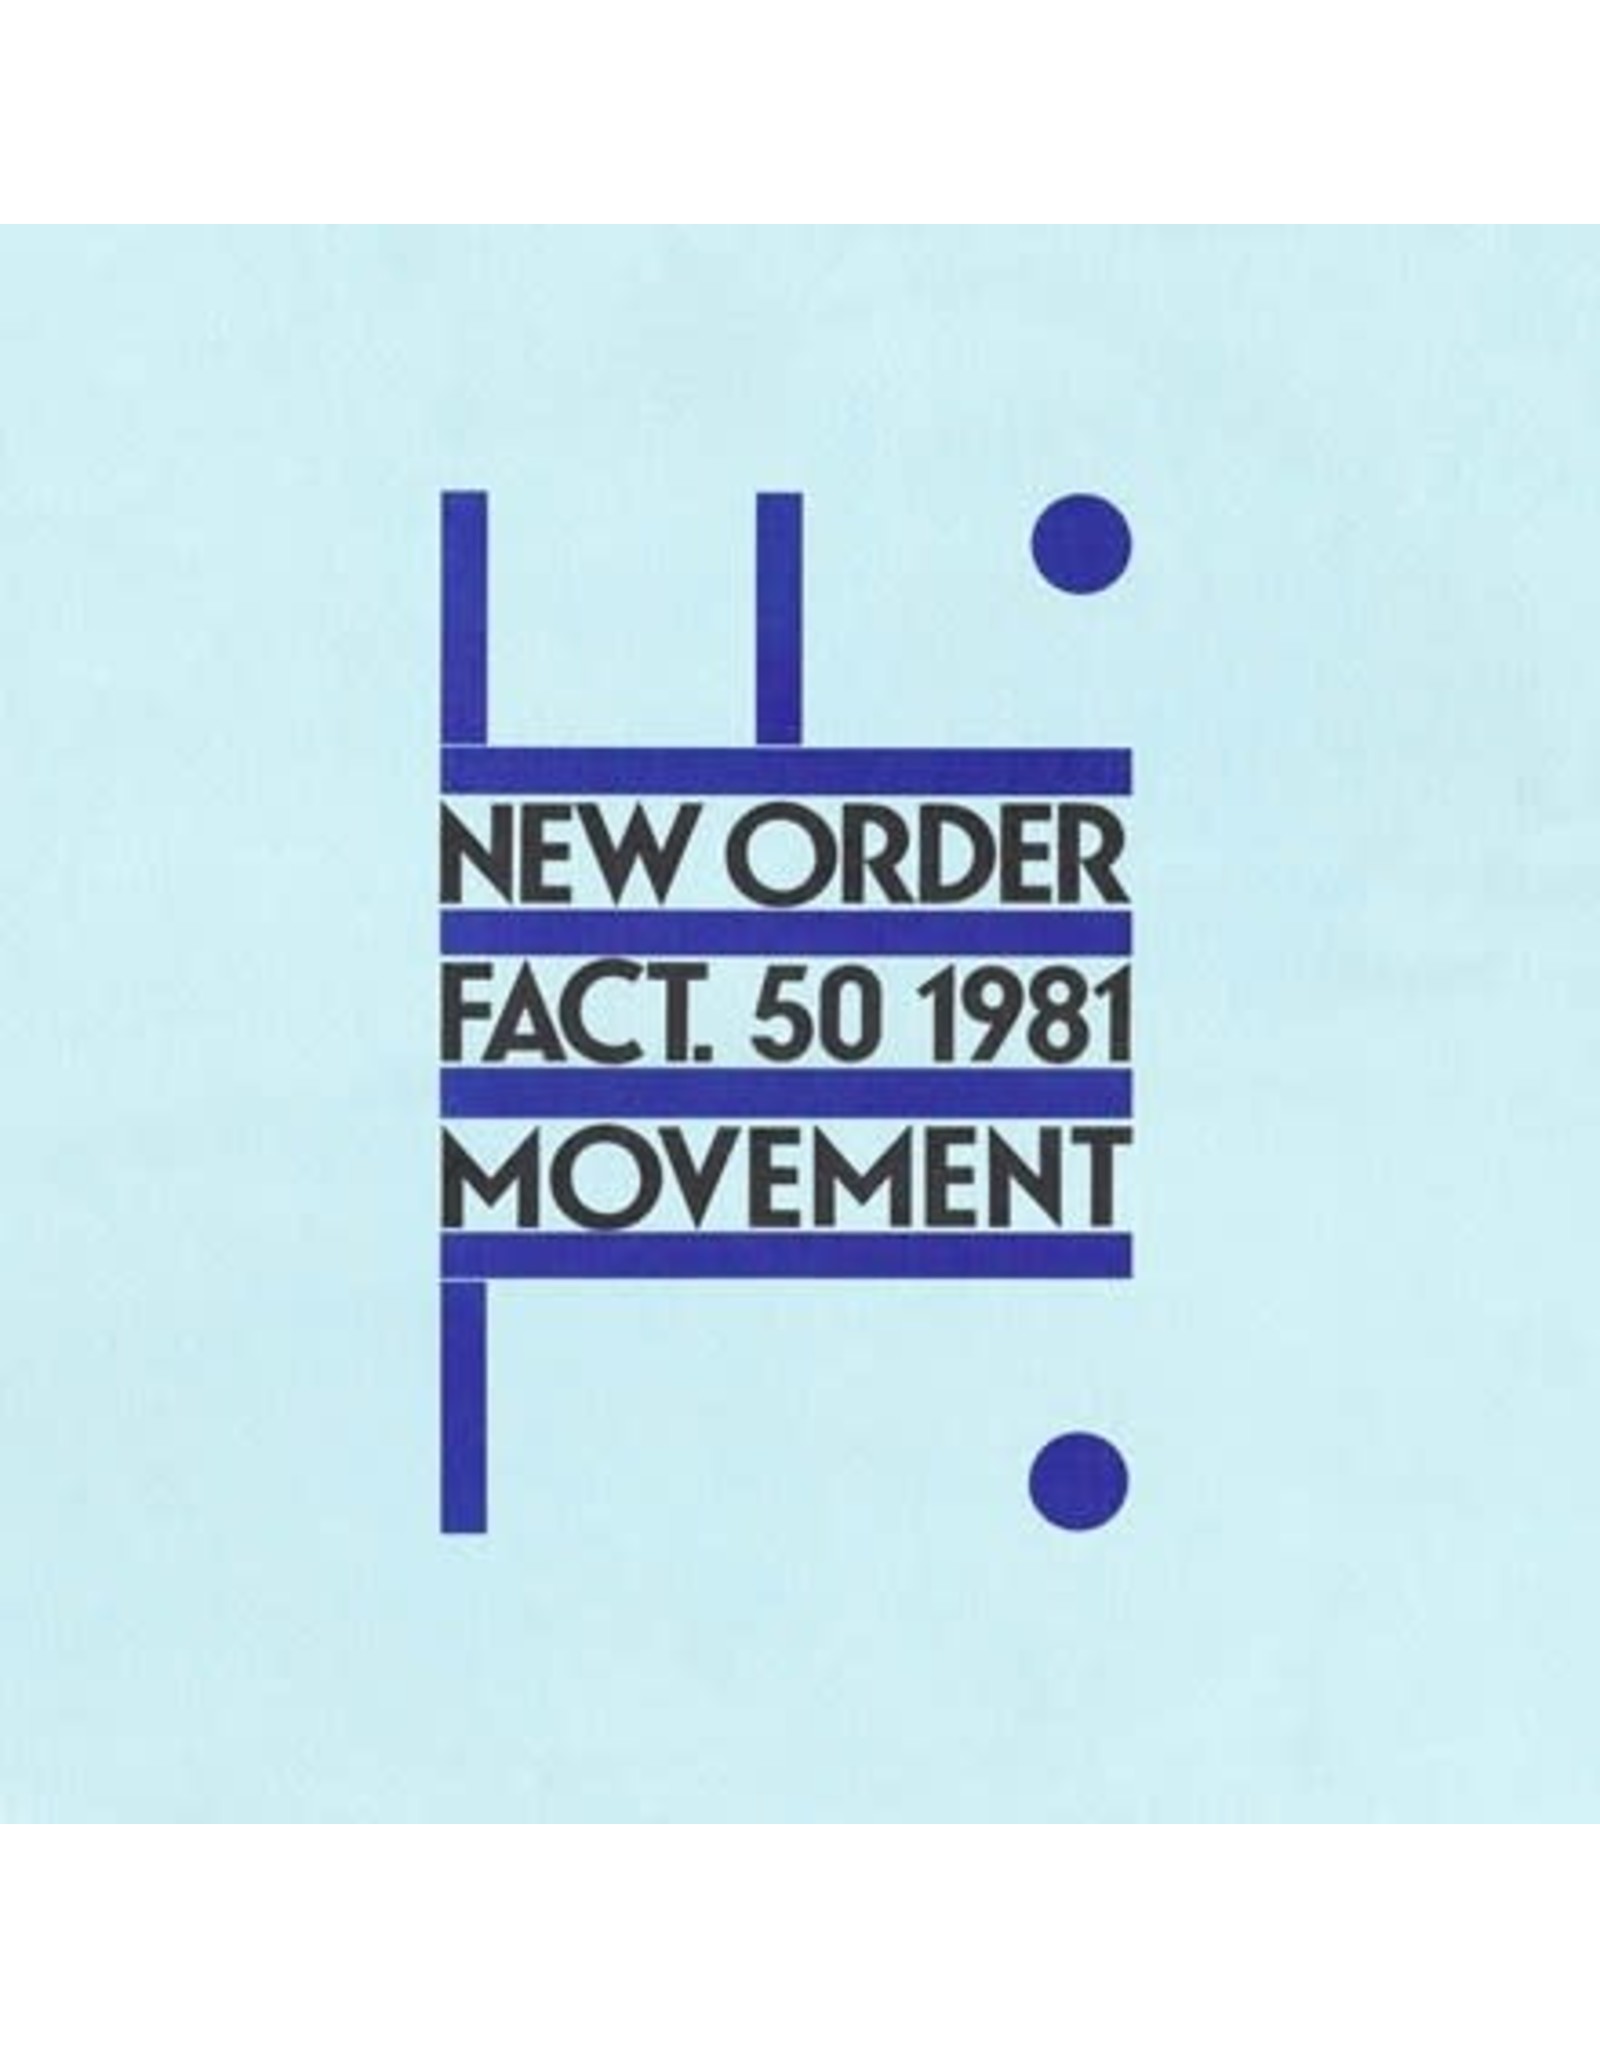 Rhino New Order: Movement LP